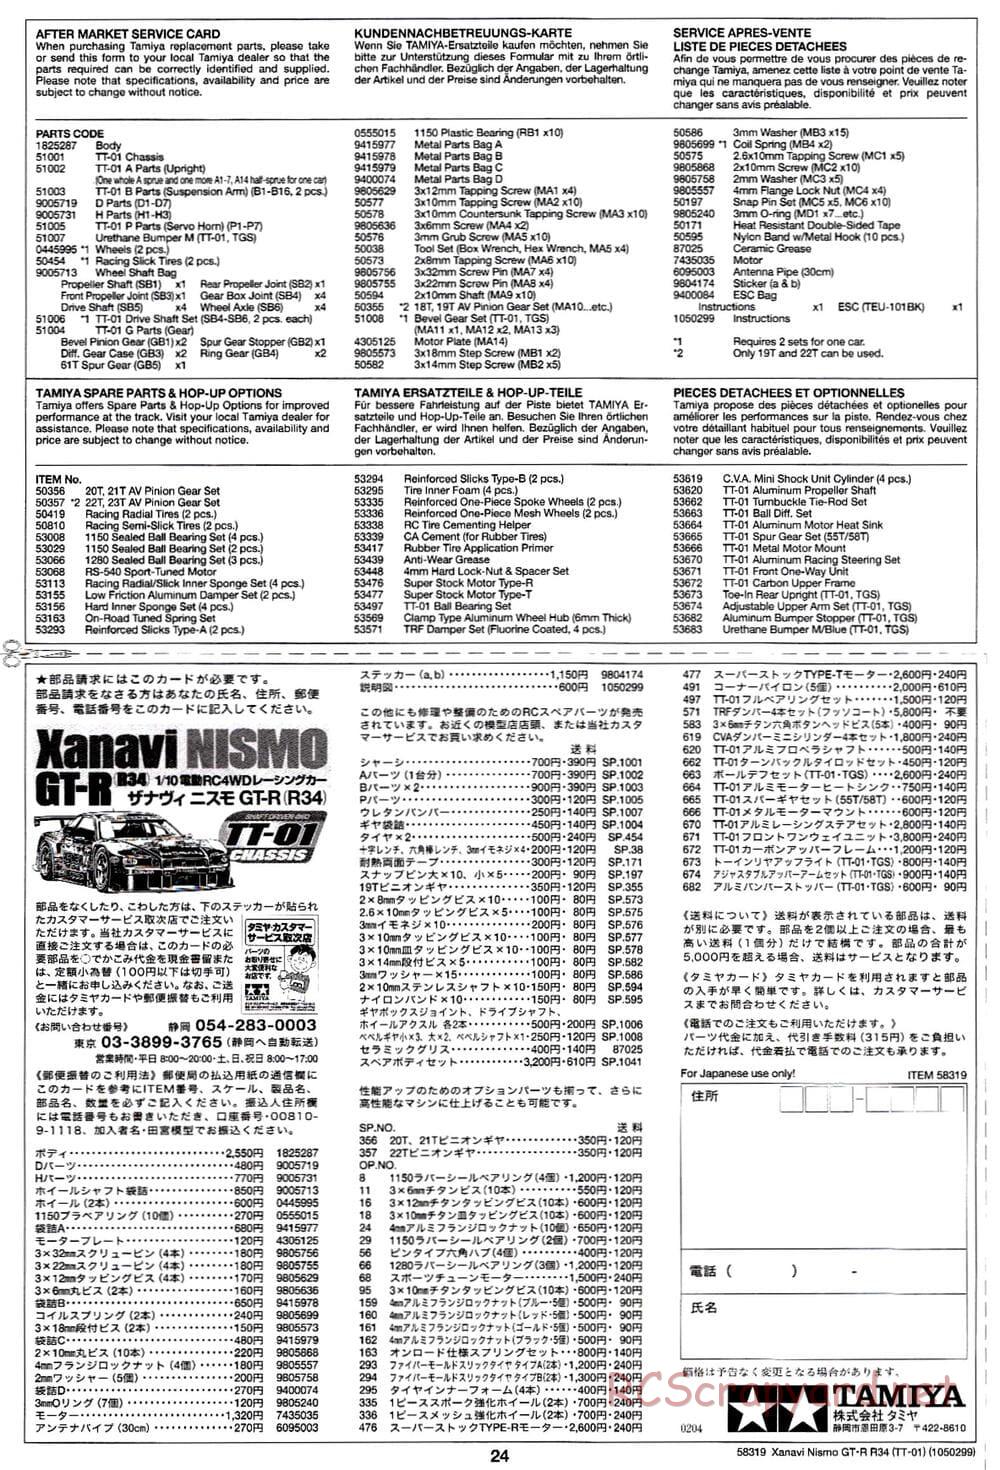 Tamiya - Xanavi Nismo GT-R R34 - TT-01 Chassis - Manual - Page 24